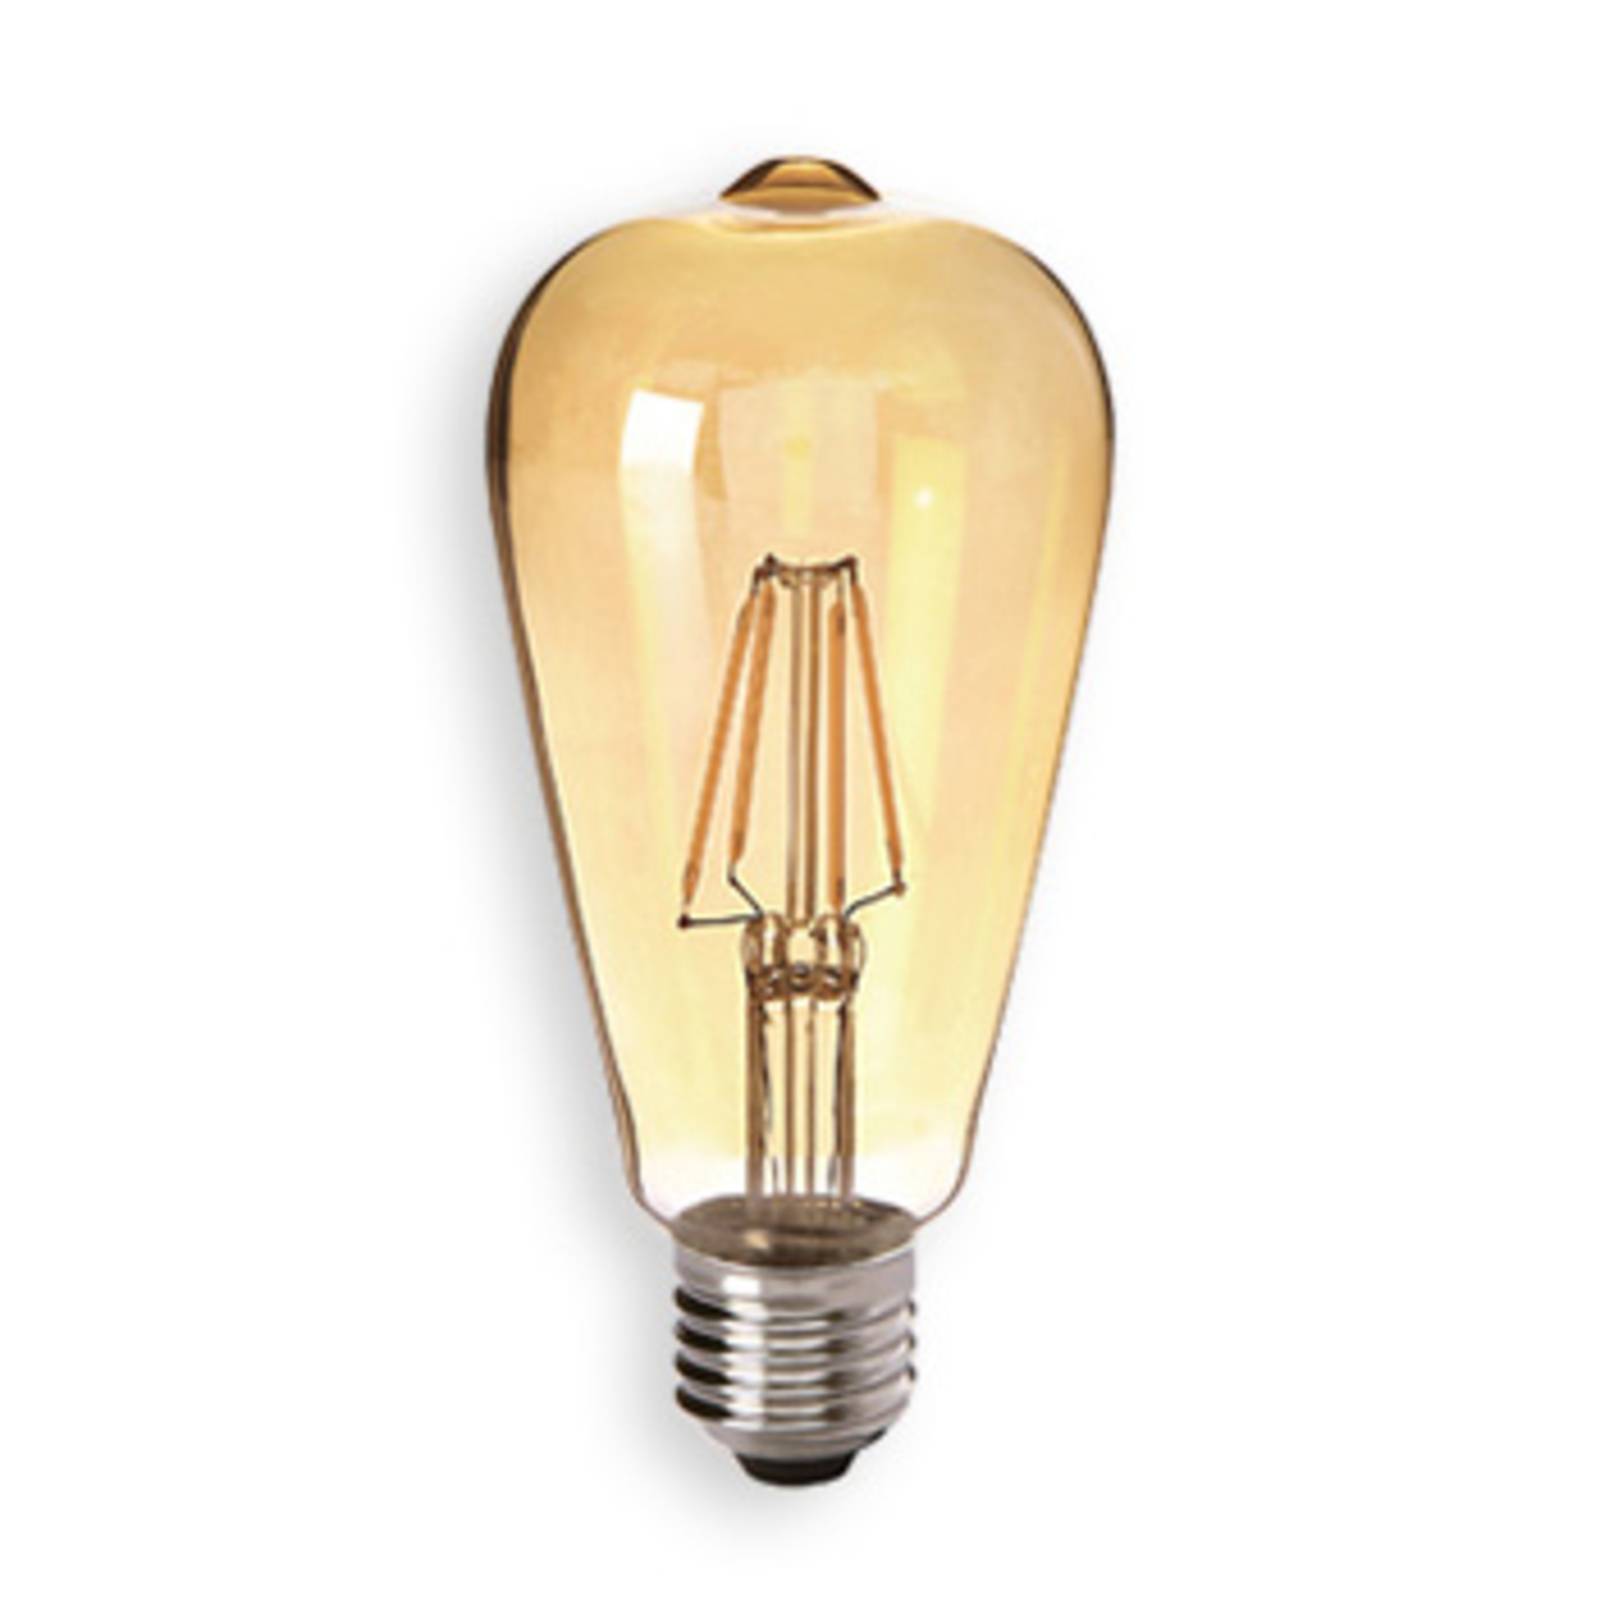 LED-Rustikalampe E27 4,5W 825 gold, klar von Sylvania